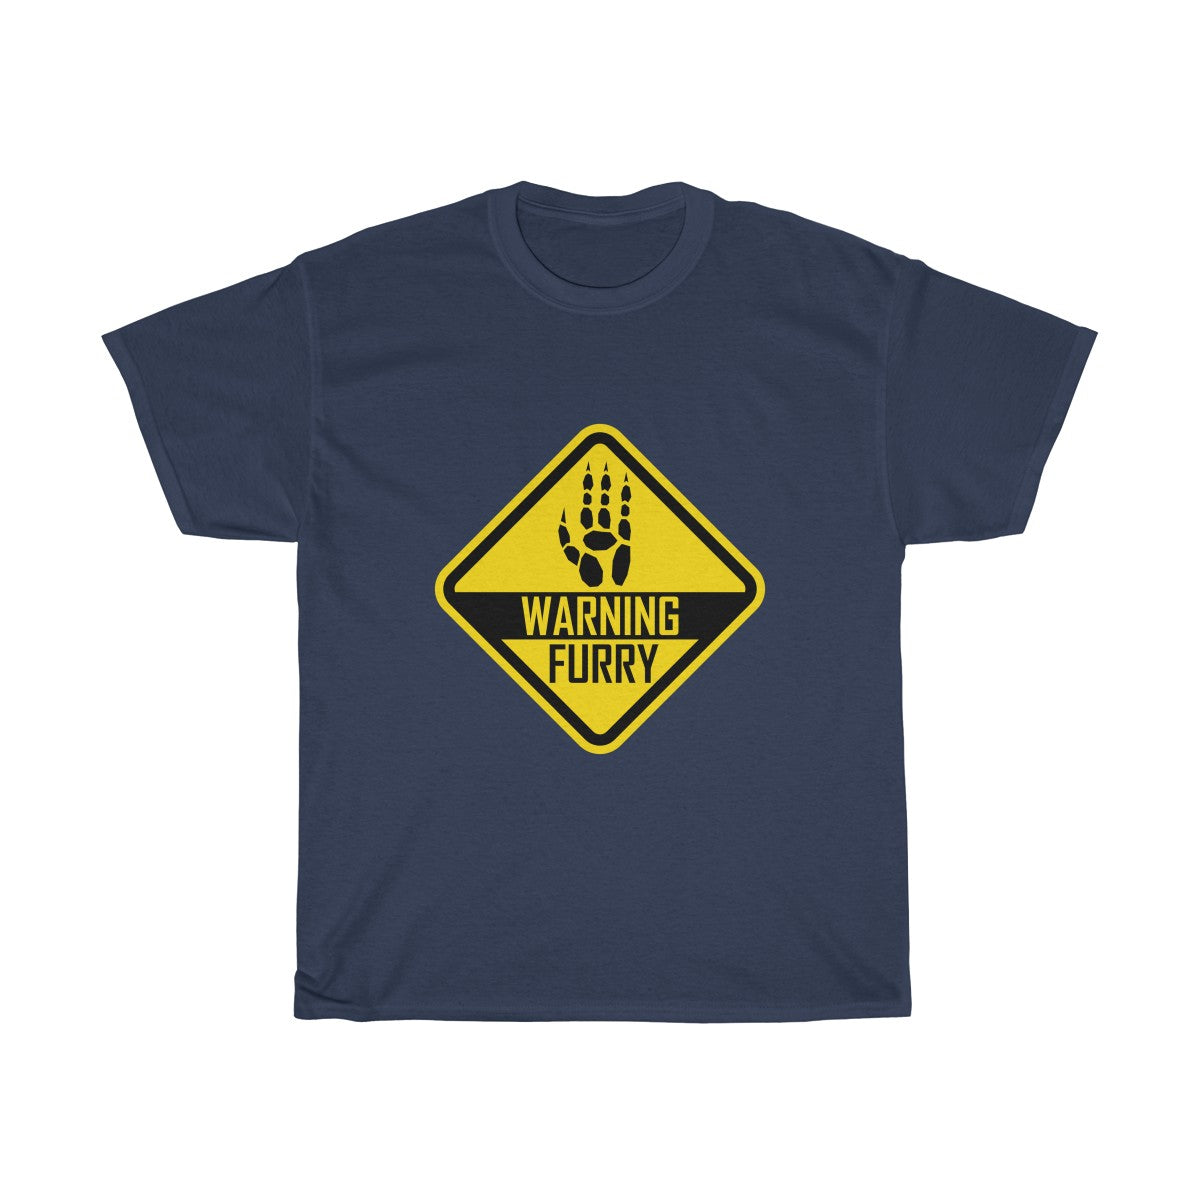 Warning Sergal - T-Shirt T-Shirt Wexon Navy Blue S 